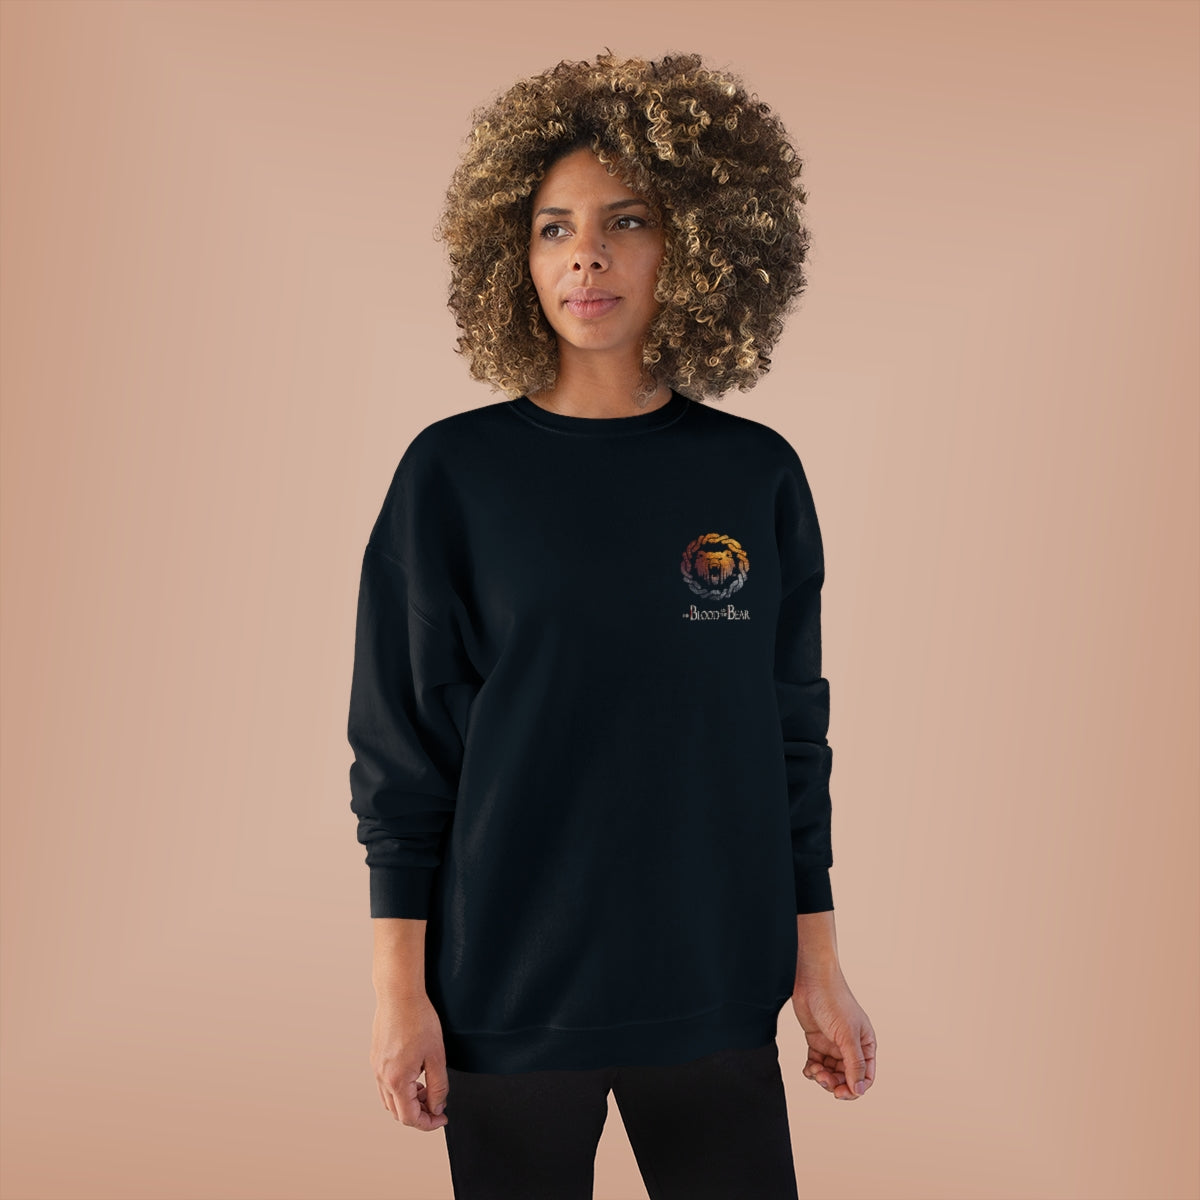 Bear Weave - Unisex EcoSmart® Crewneck Sweatshirt - Small Print